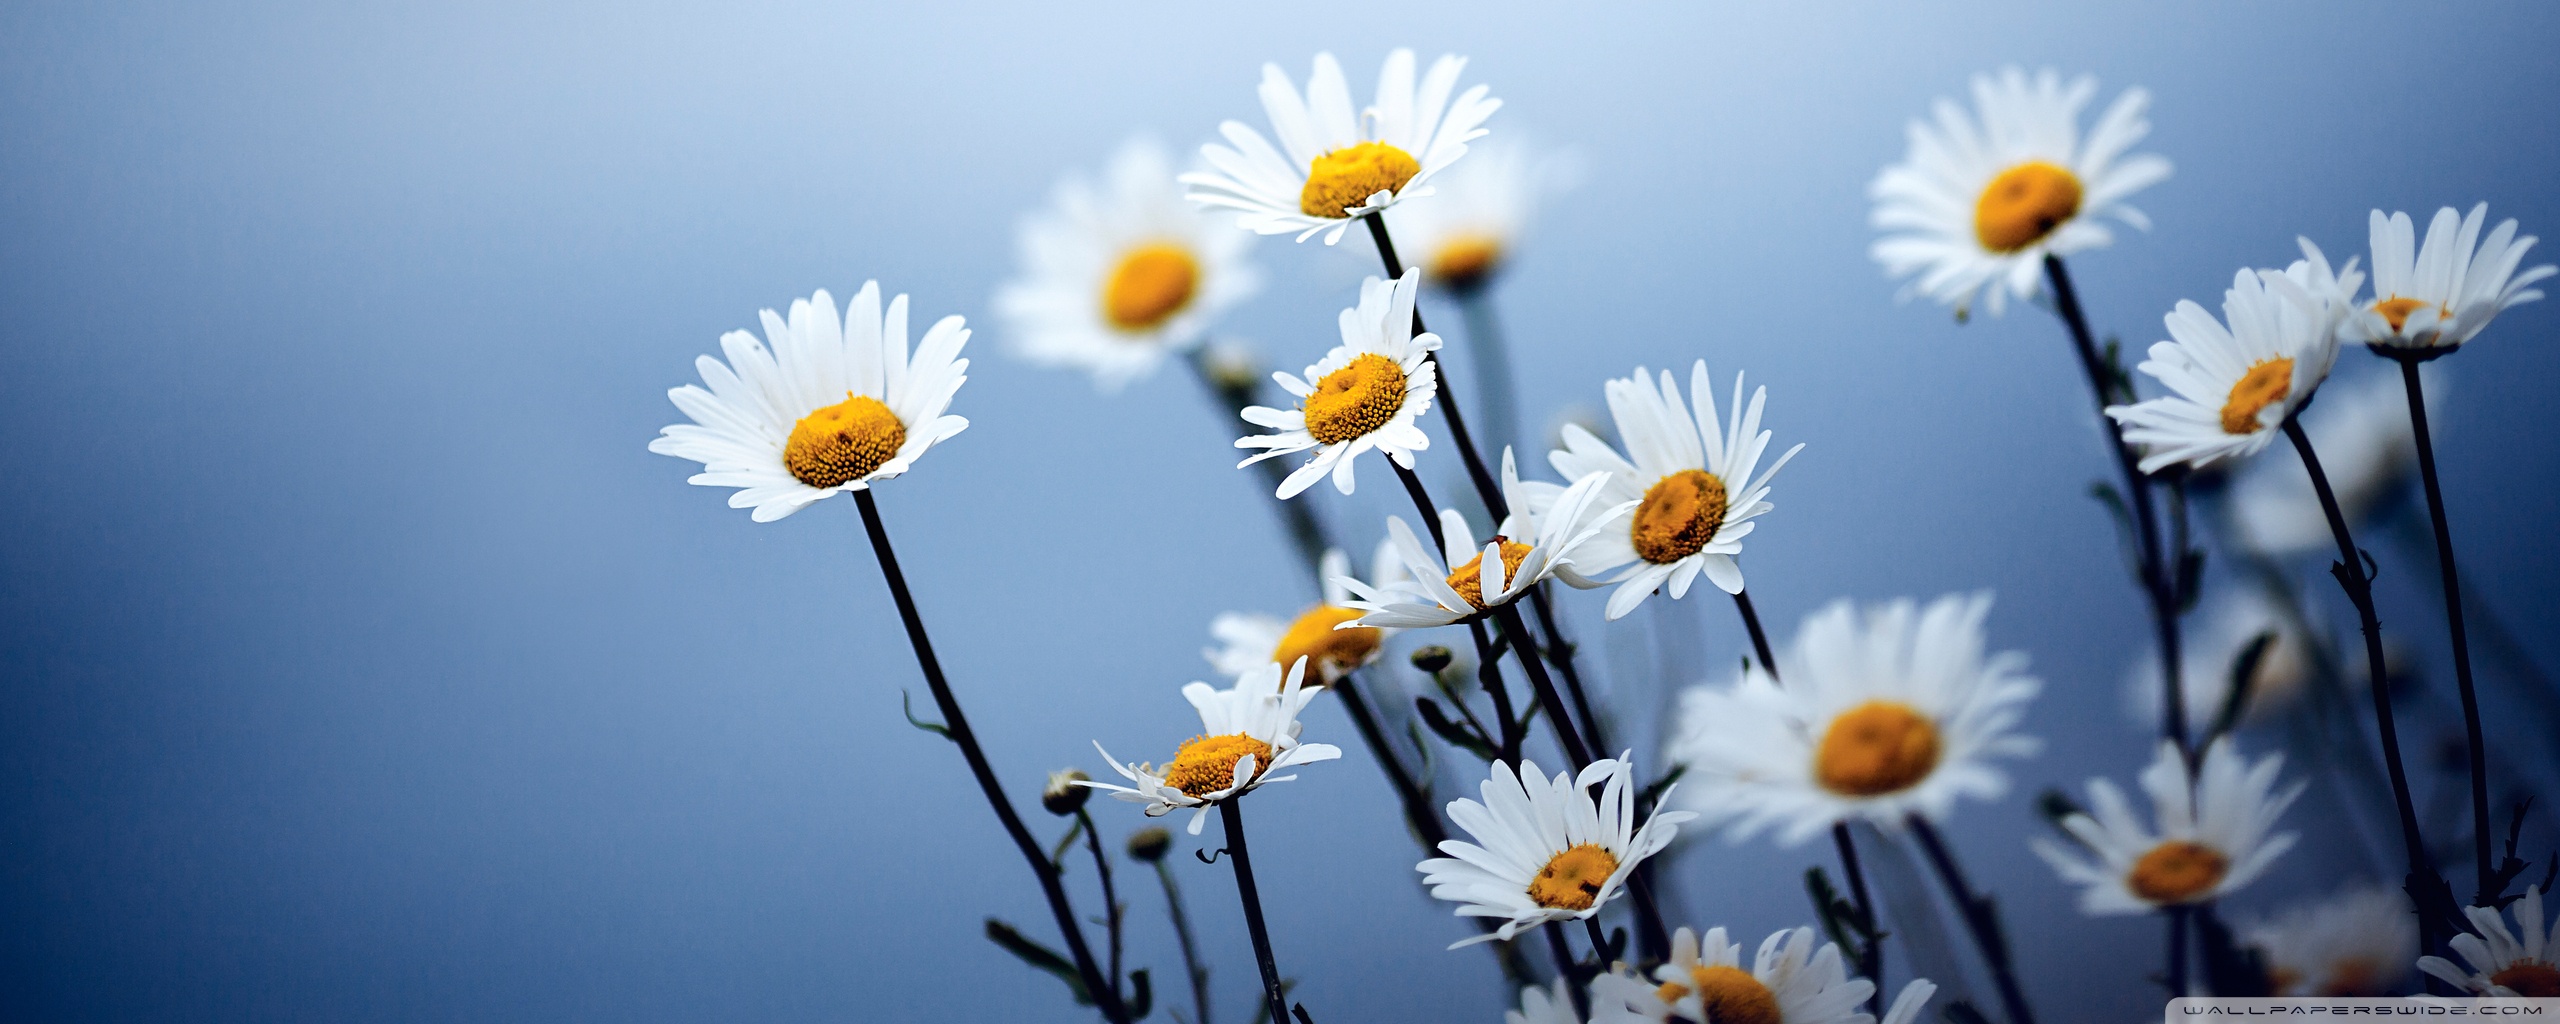 White Daisies Flowers ❤ 4K HD Desktop Wallpaper for 4K Ultra HD TV ...